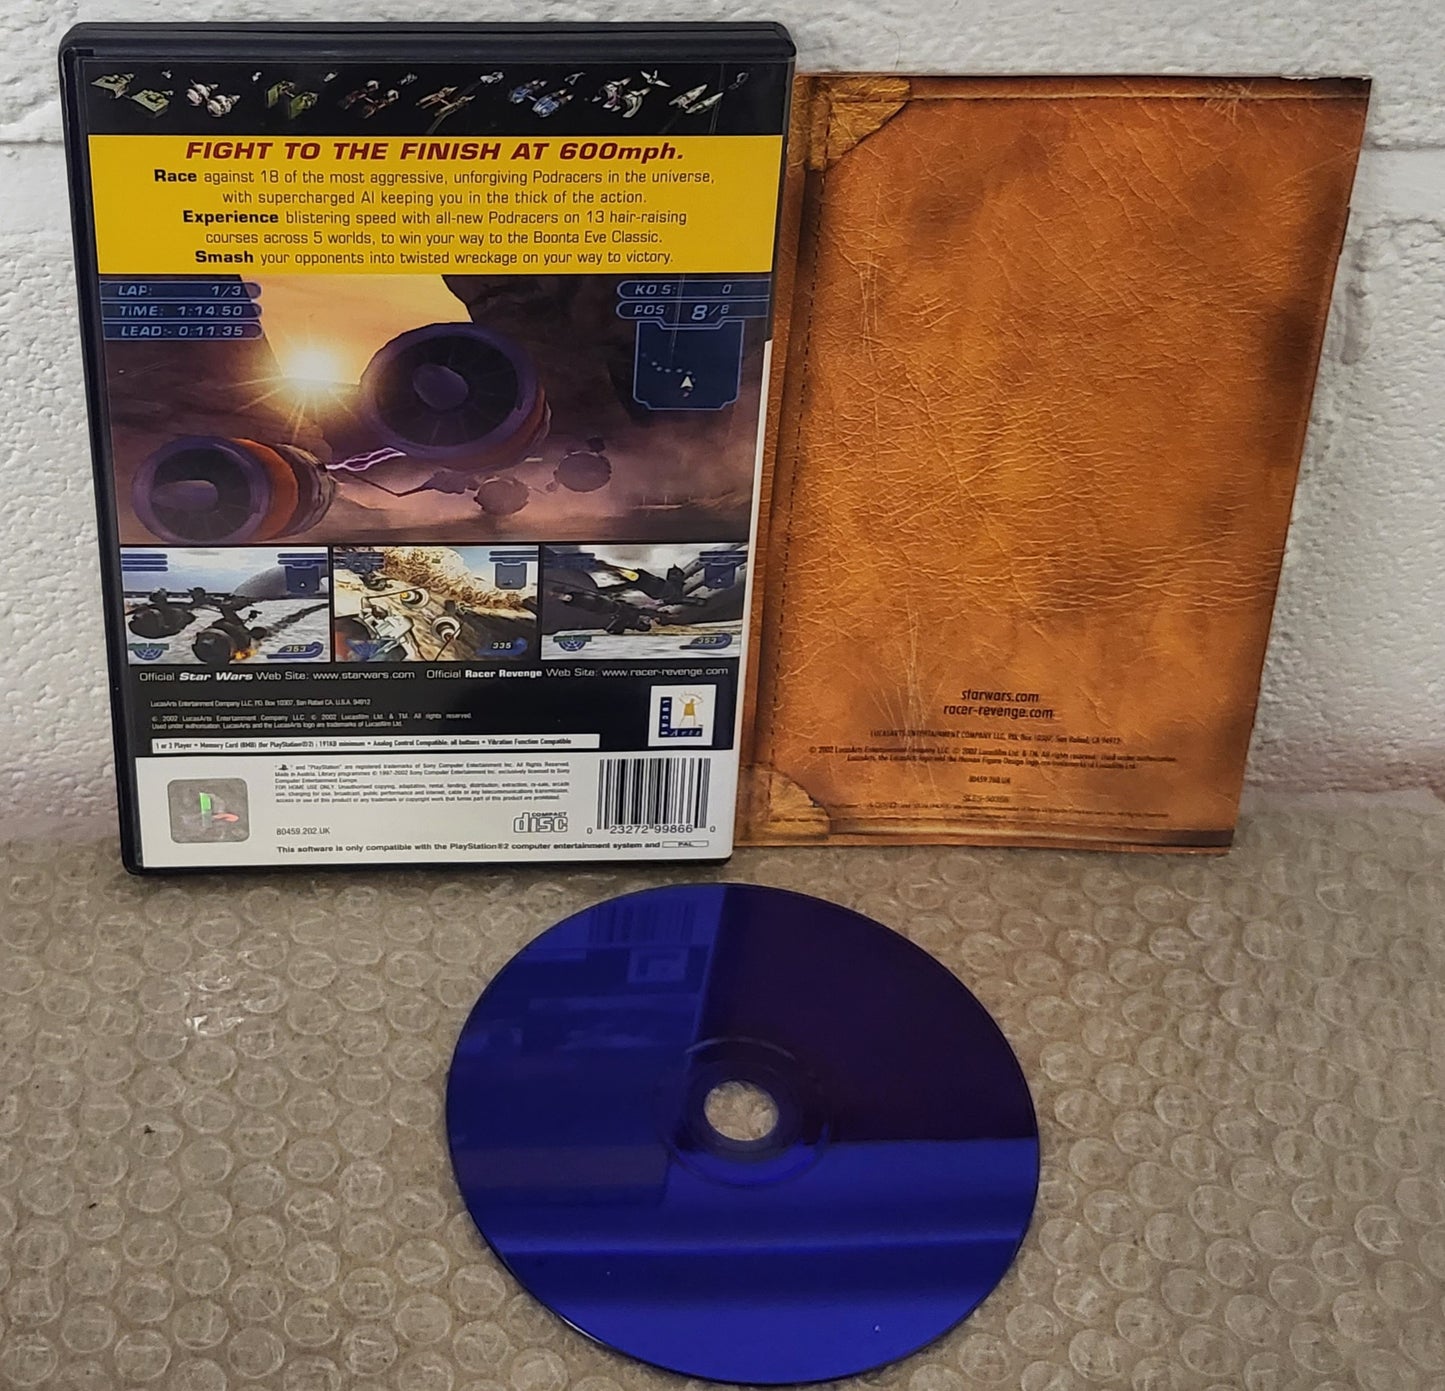 Star Wars: Racer Revenge PS2 (Sony PlayStation 2) game